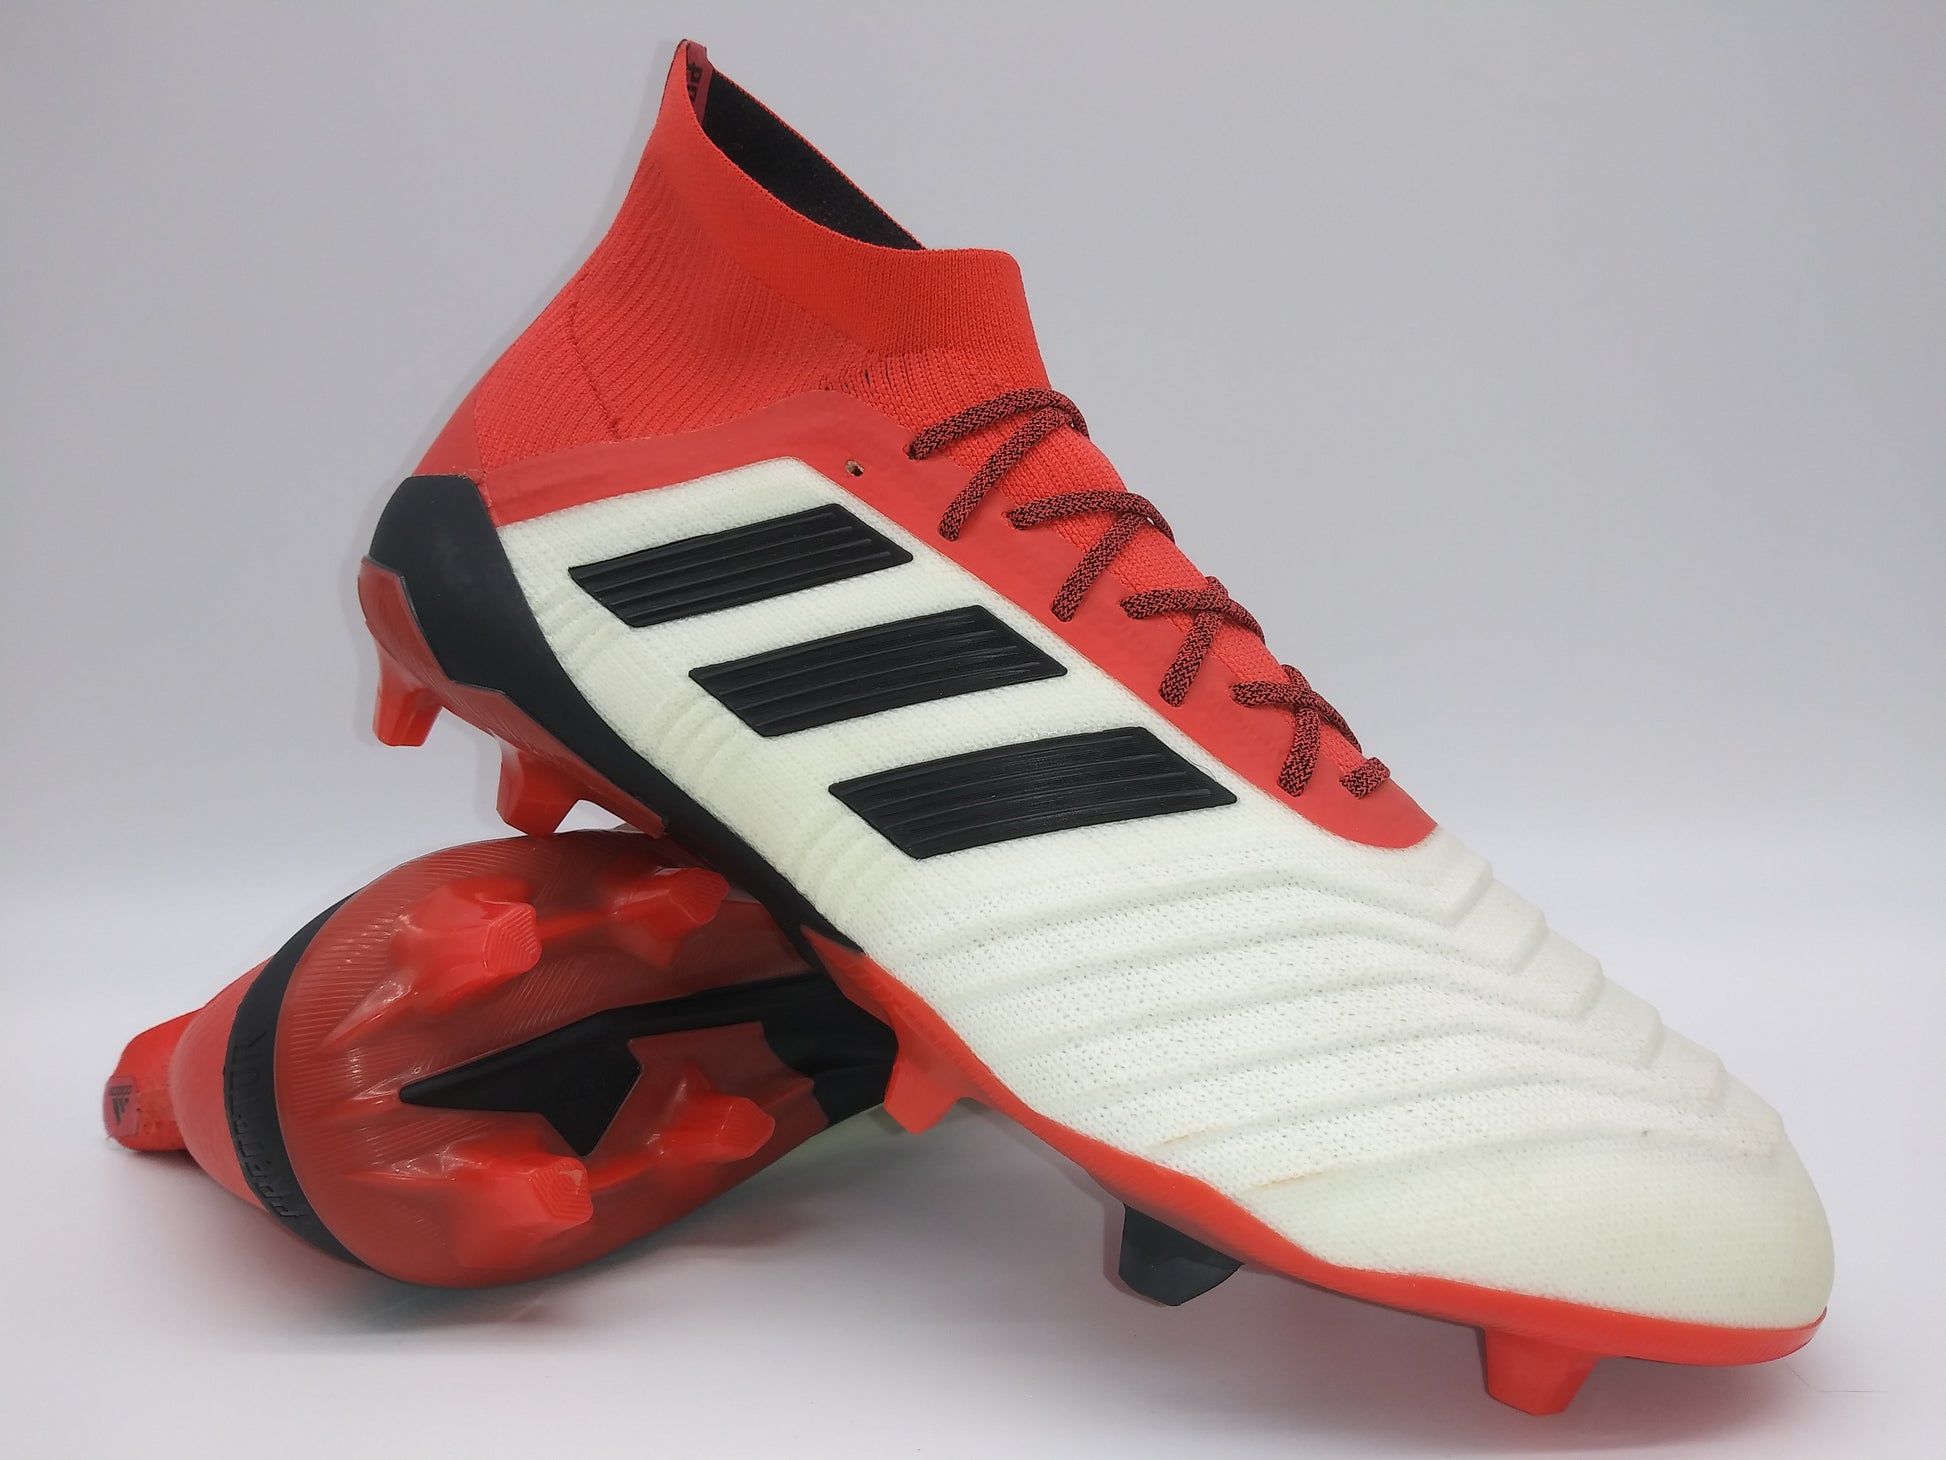 Adidas Predator 18.1 White Red Villegas Footwear